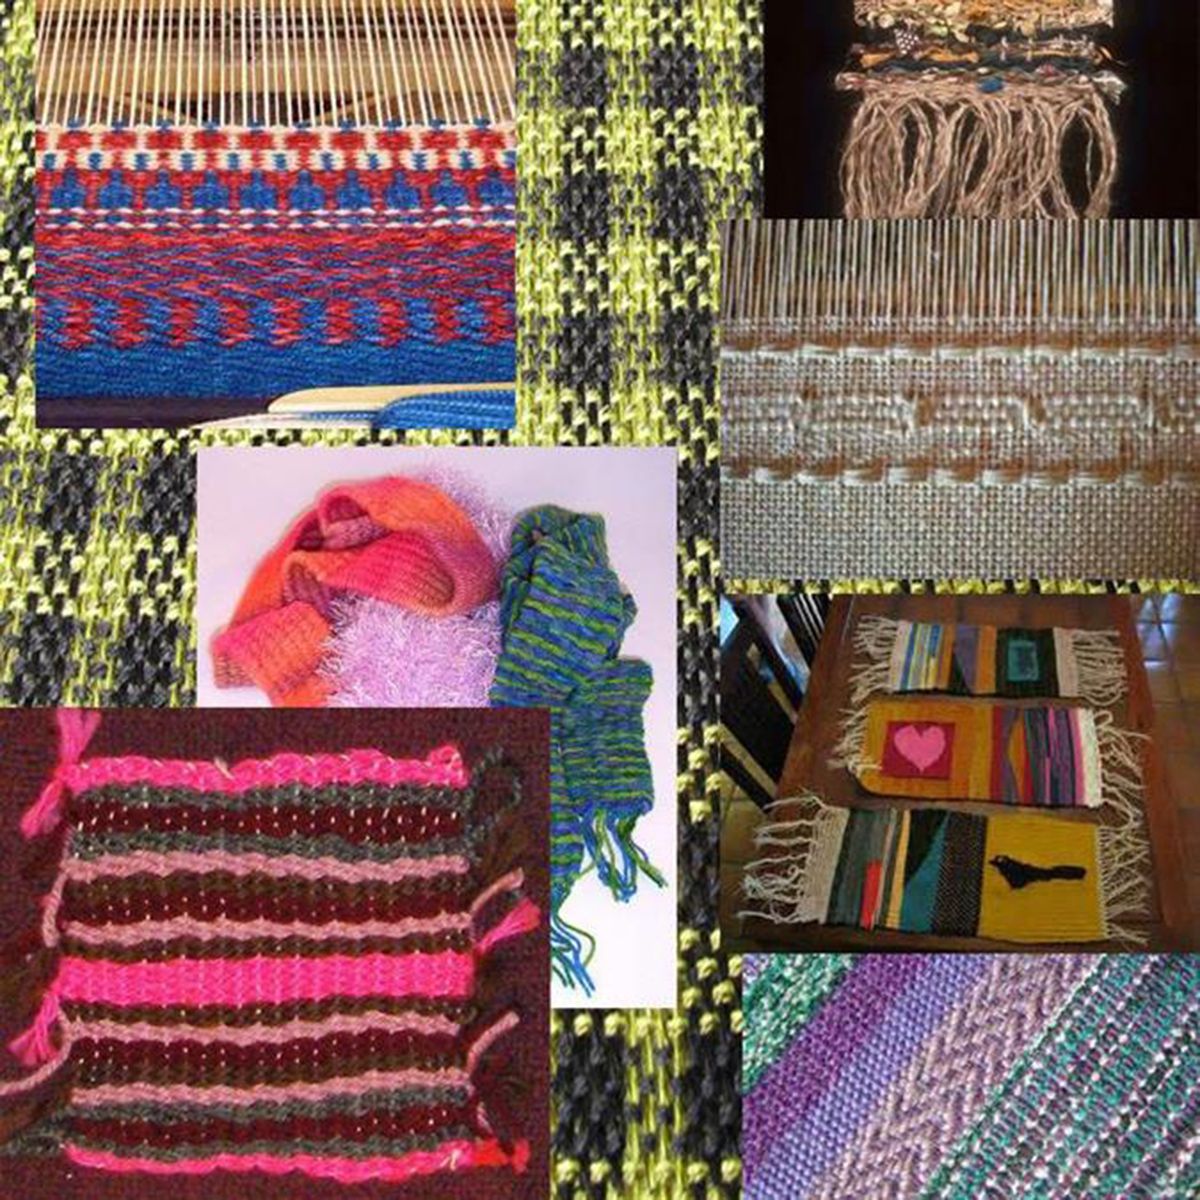 Wooden-Weaving-Loom-Tapestry-Knitting-Machine-Play-Toys-Kid-DIY-Craft-Kit-Gift-1632626